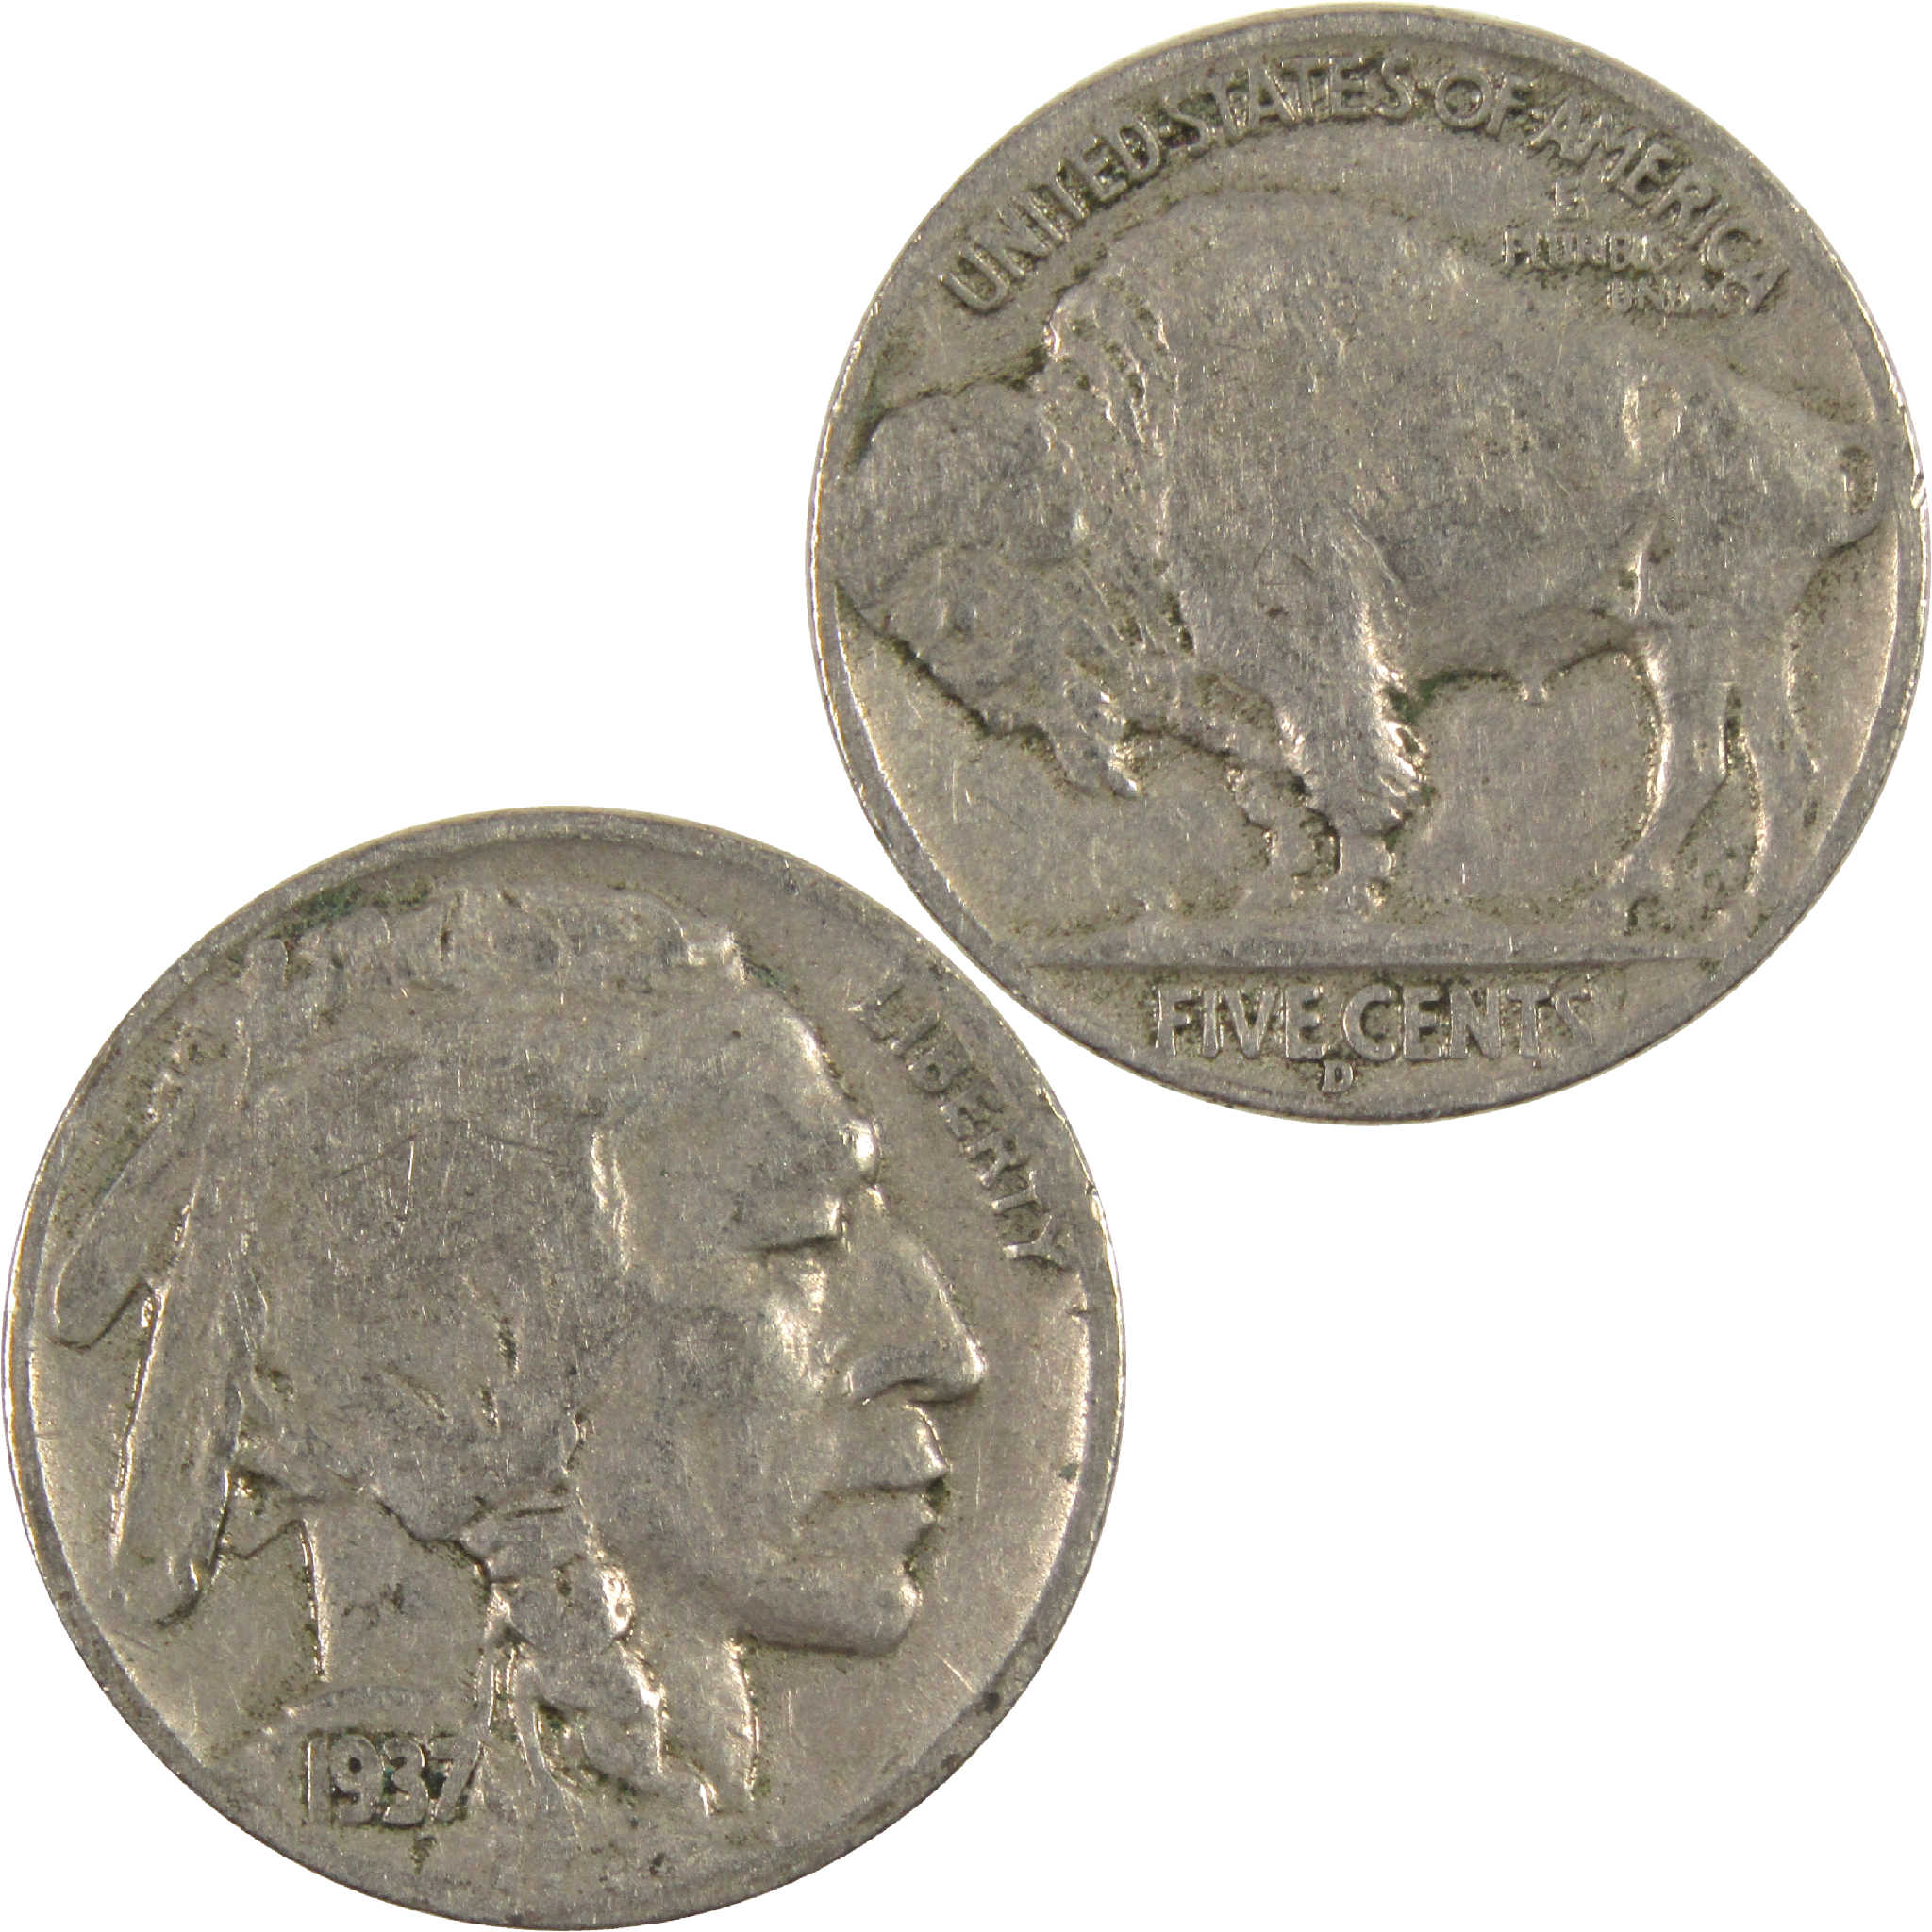 1937 D Indian Head Buffalo Nickel AG About Good 5c Coin